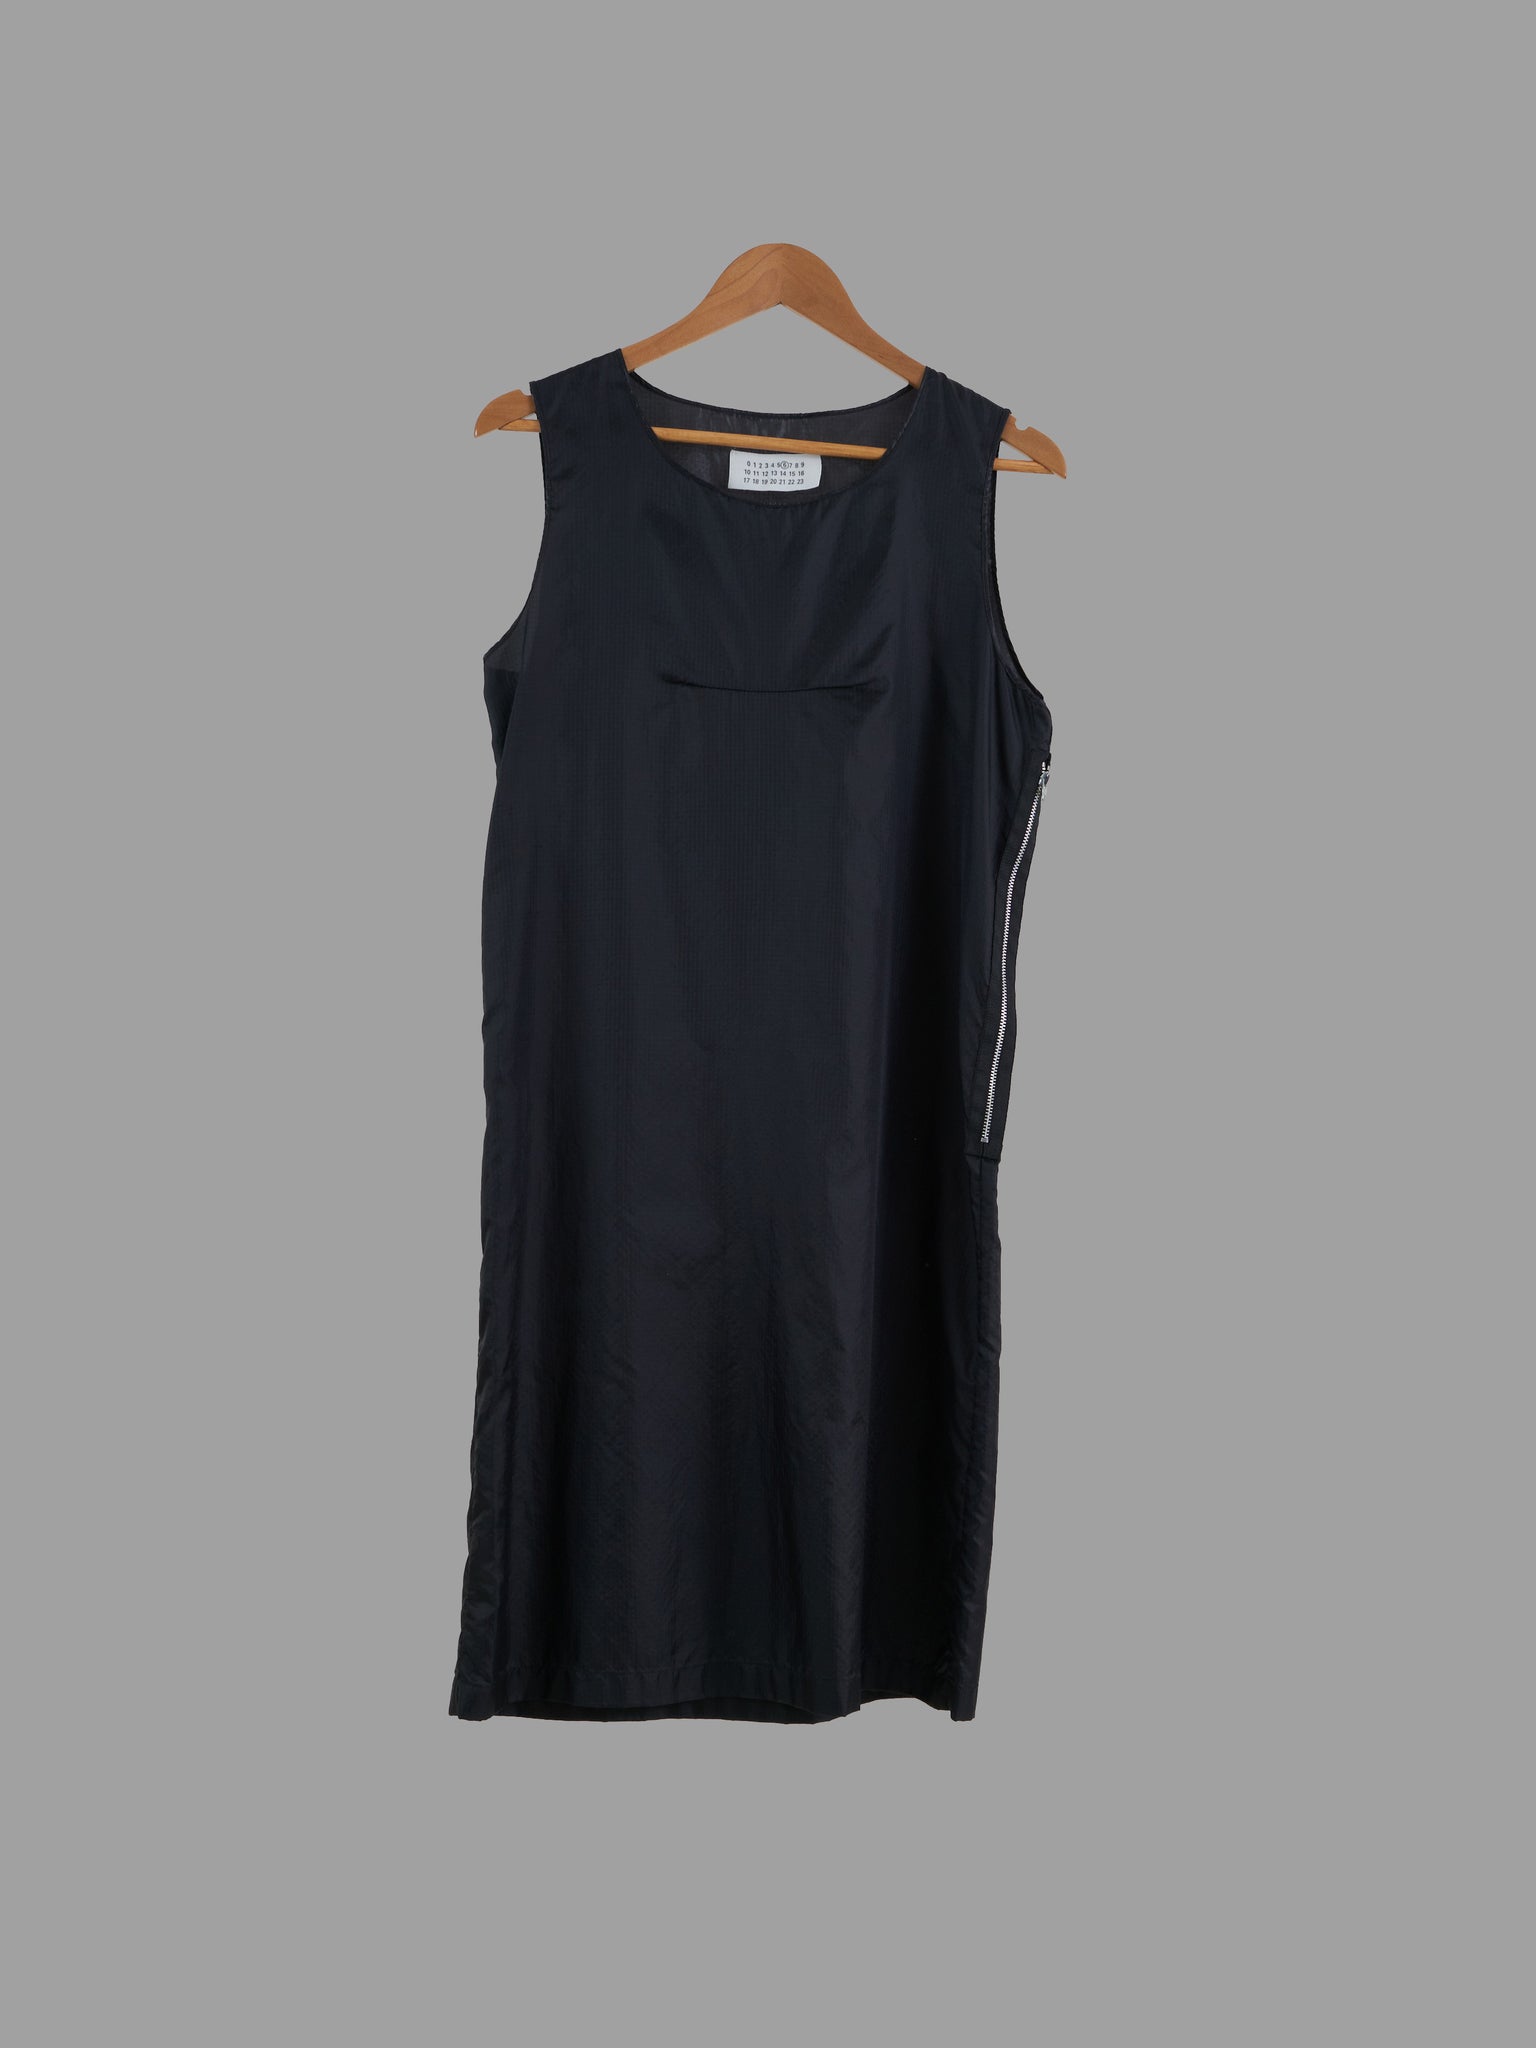 Maison Martin Margiela line 6 1990s - 2000s black ripstop nylon sleeveless dress